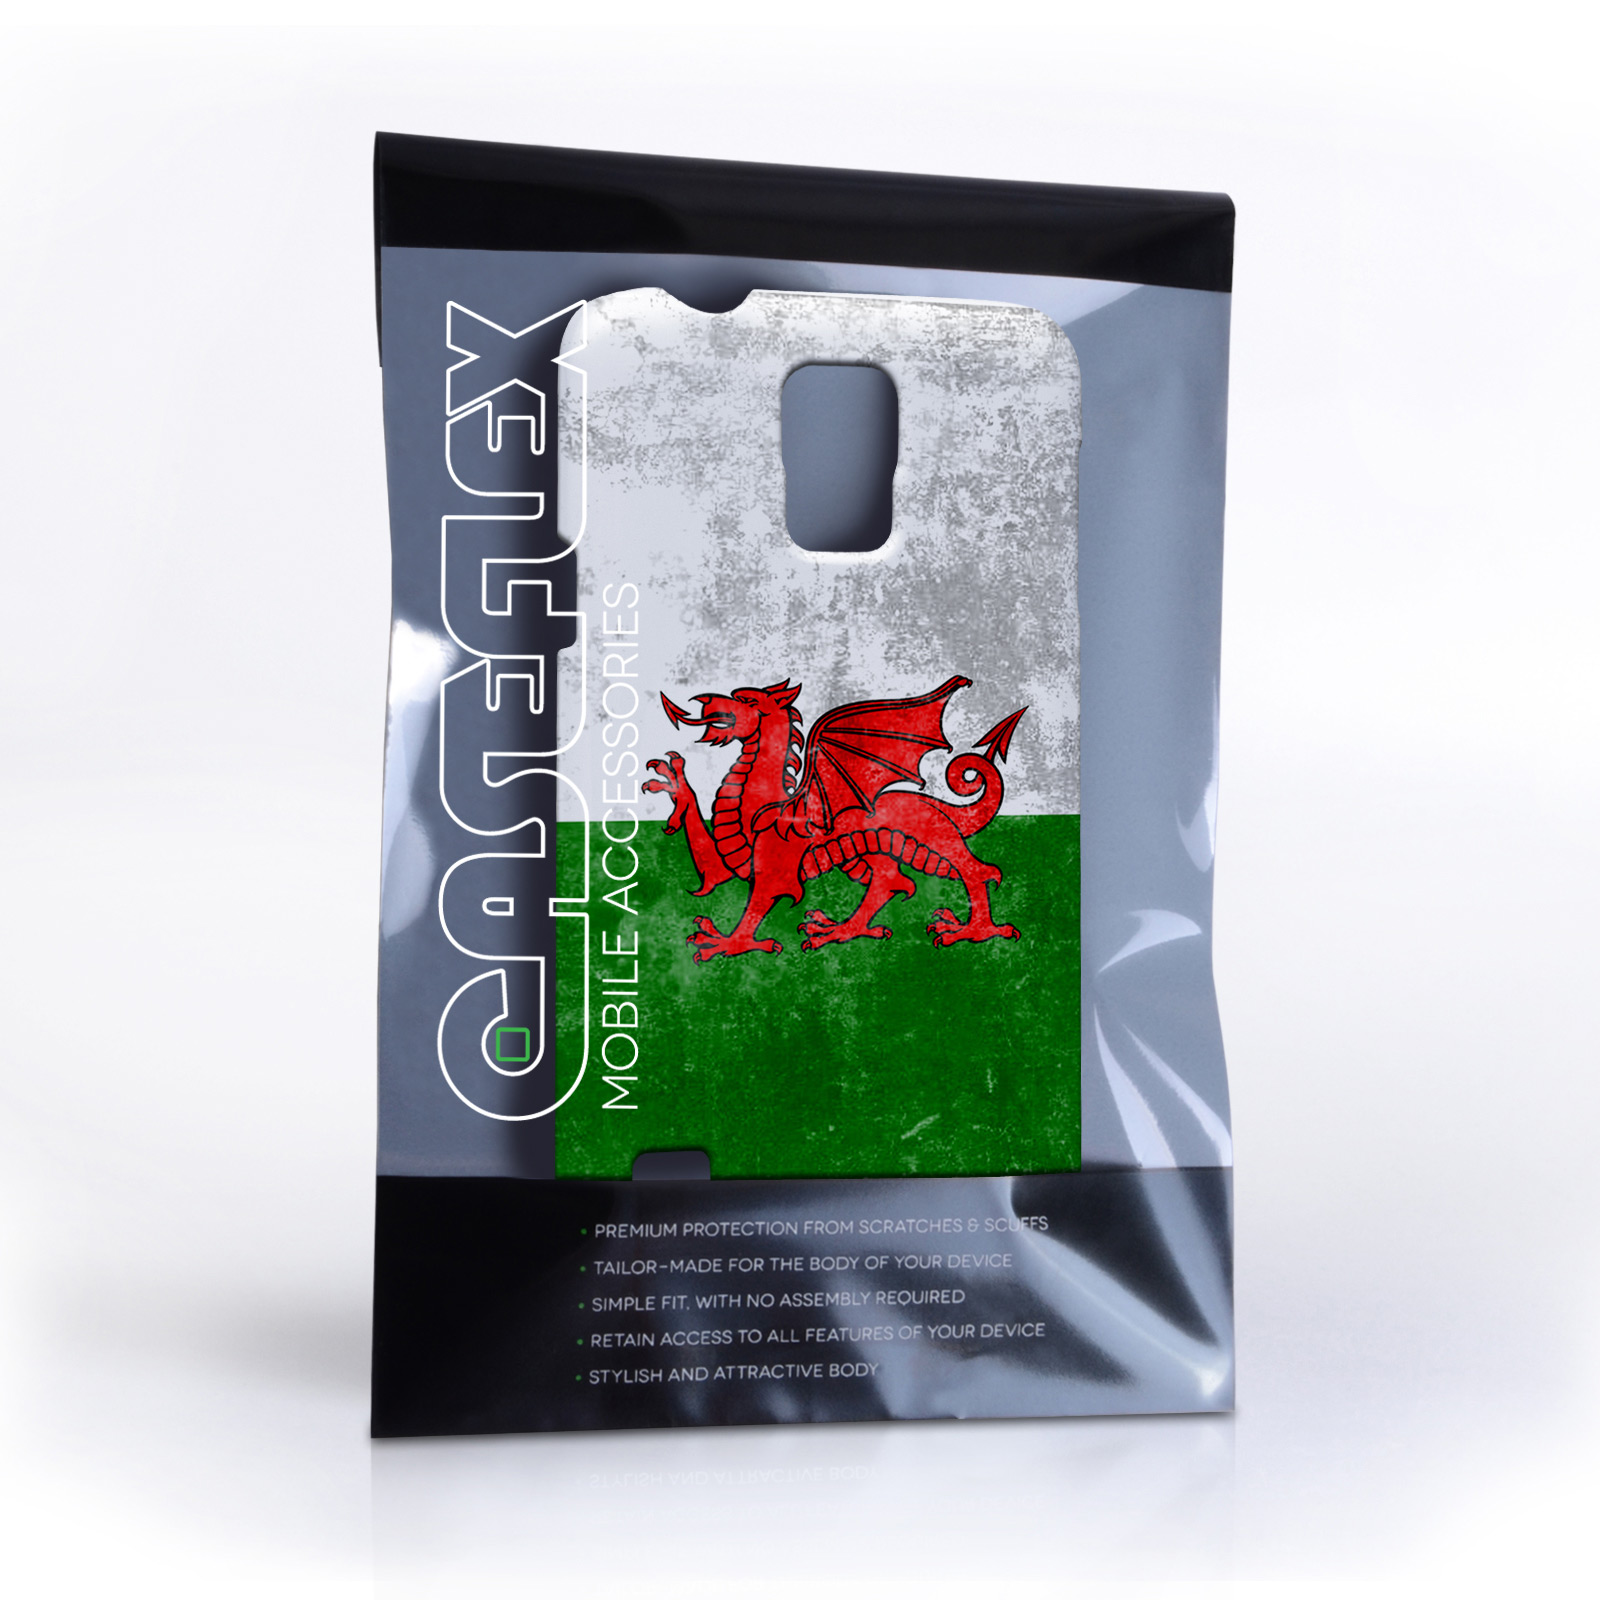 Caseflex Samsung Galaxy S5 Retro Wales Flag Case